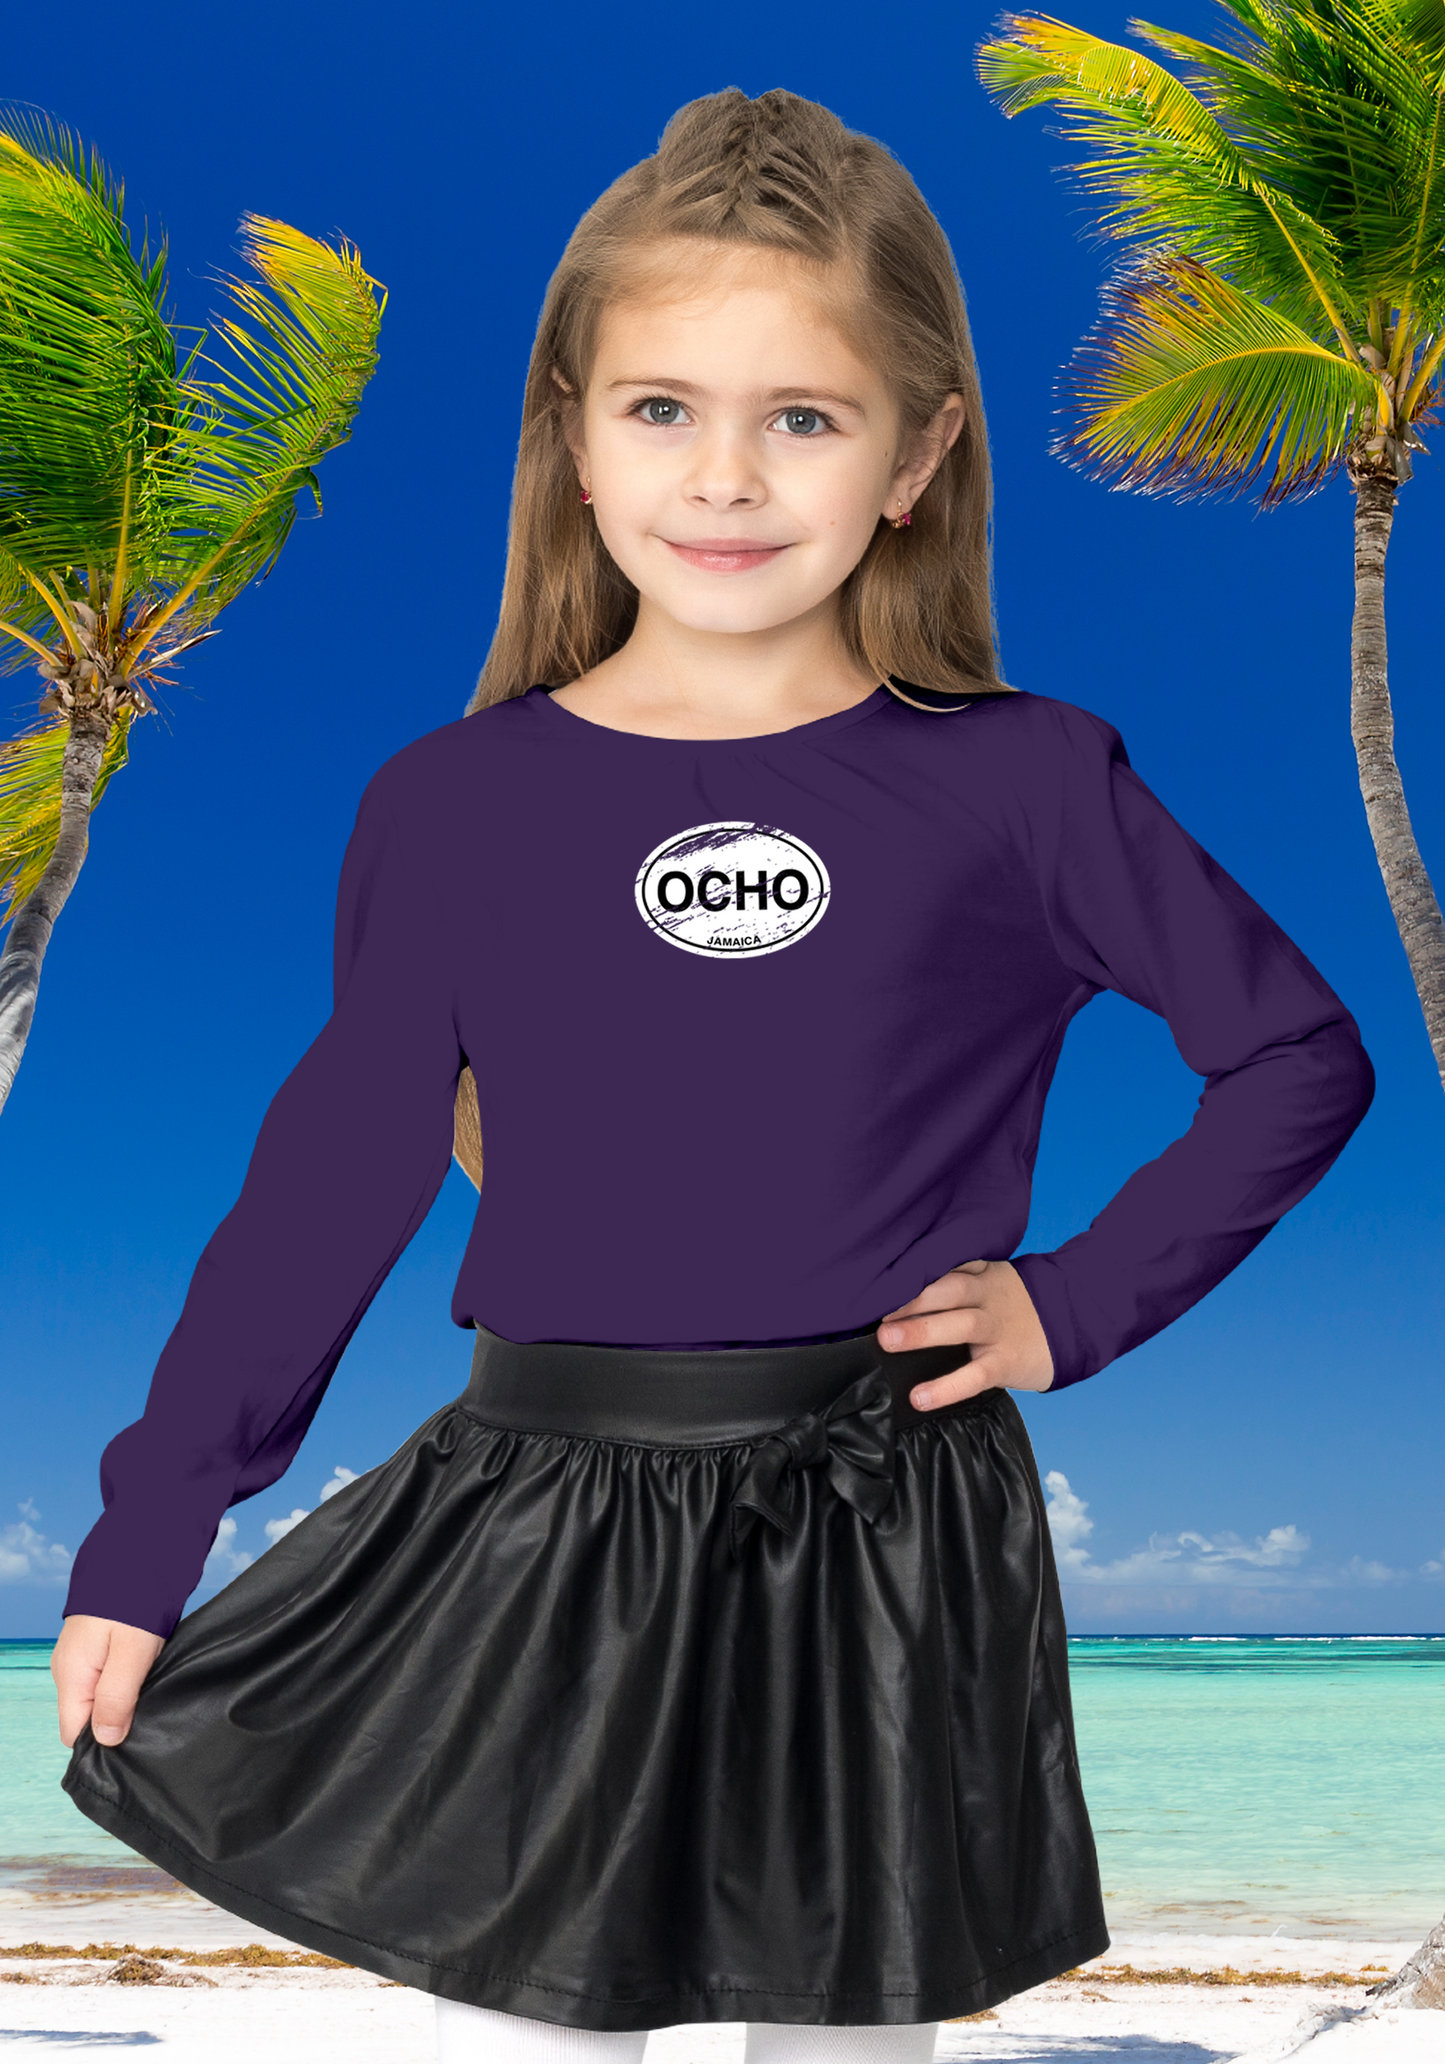 Ocho Rios Youth Classic Long Sleeve T-Shirts - My Destination Location